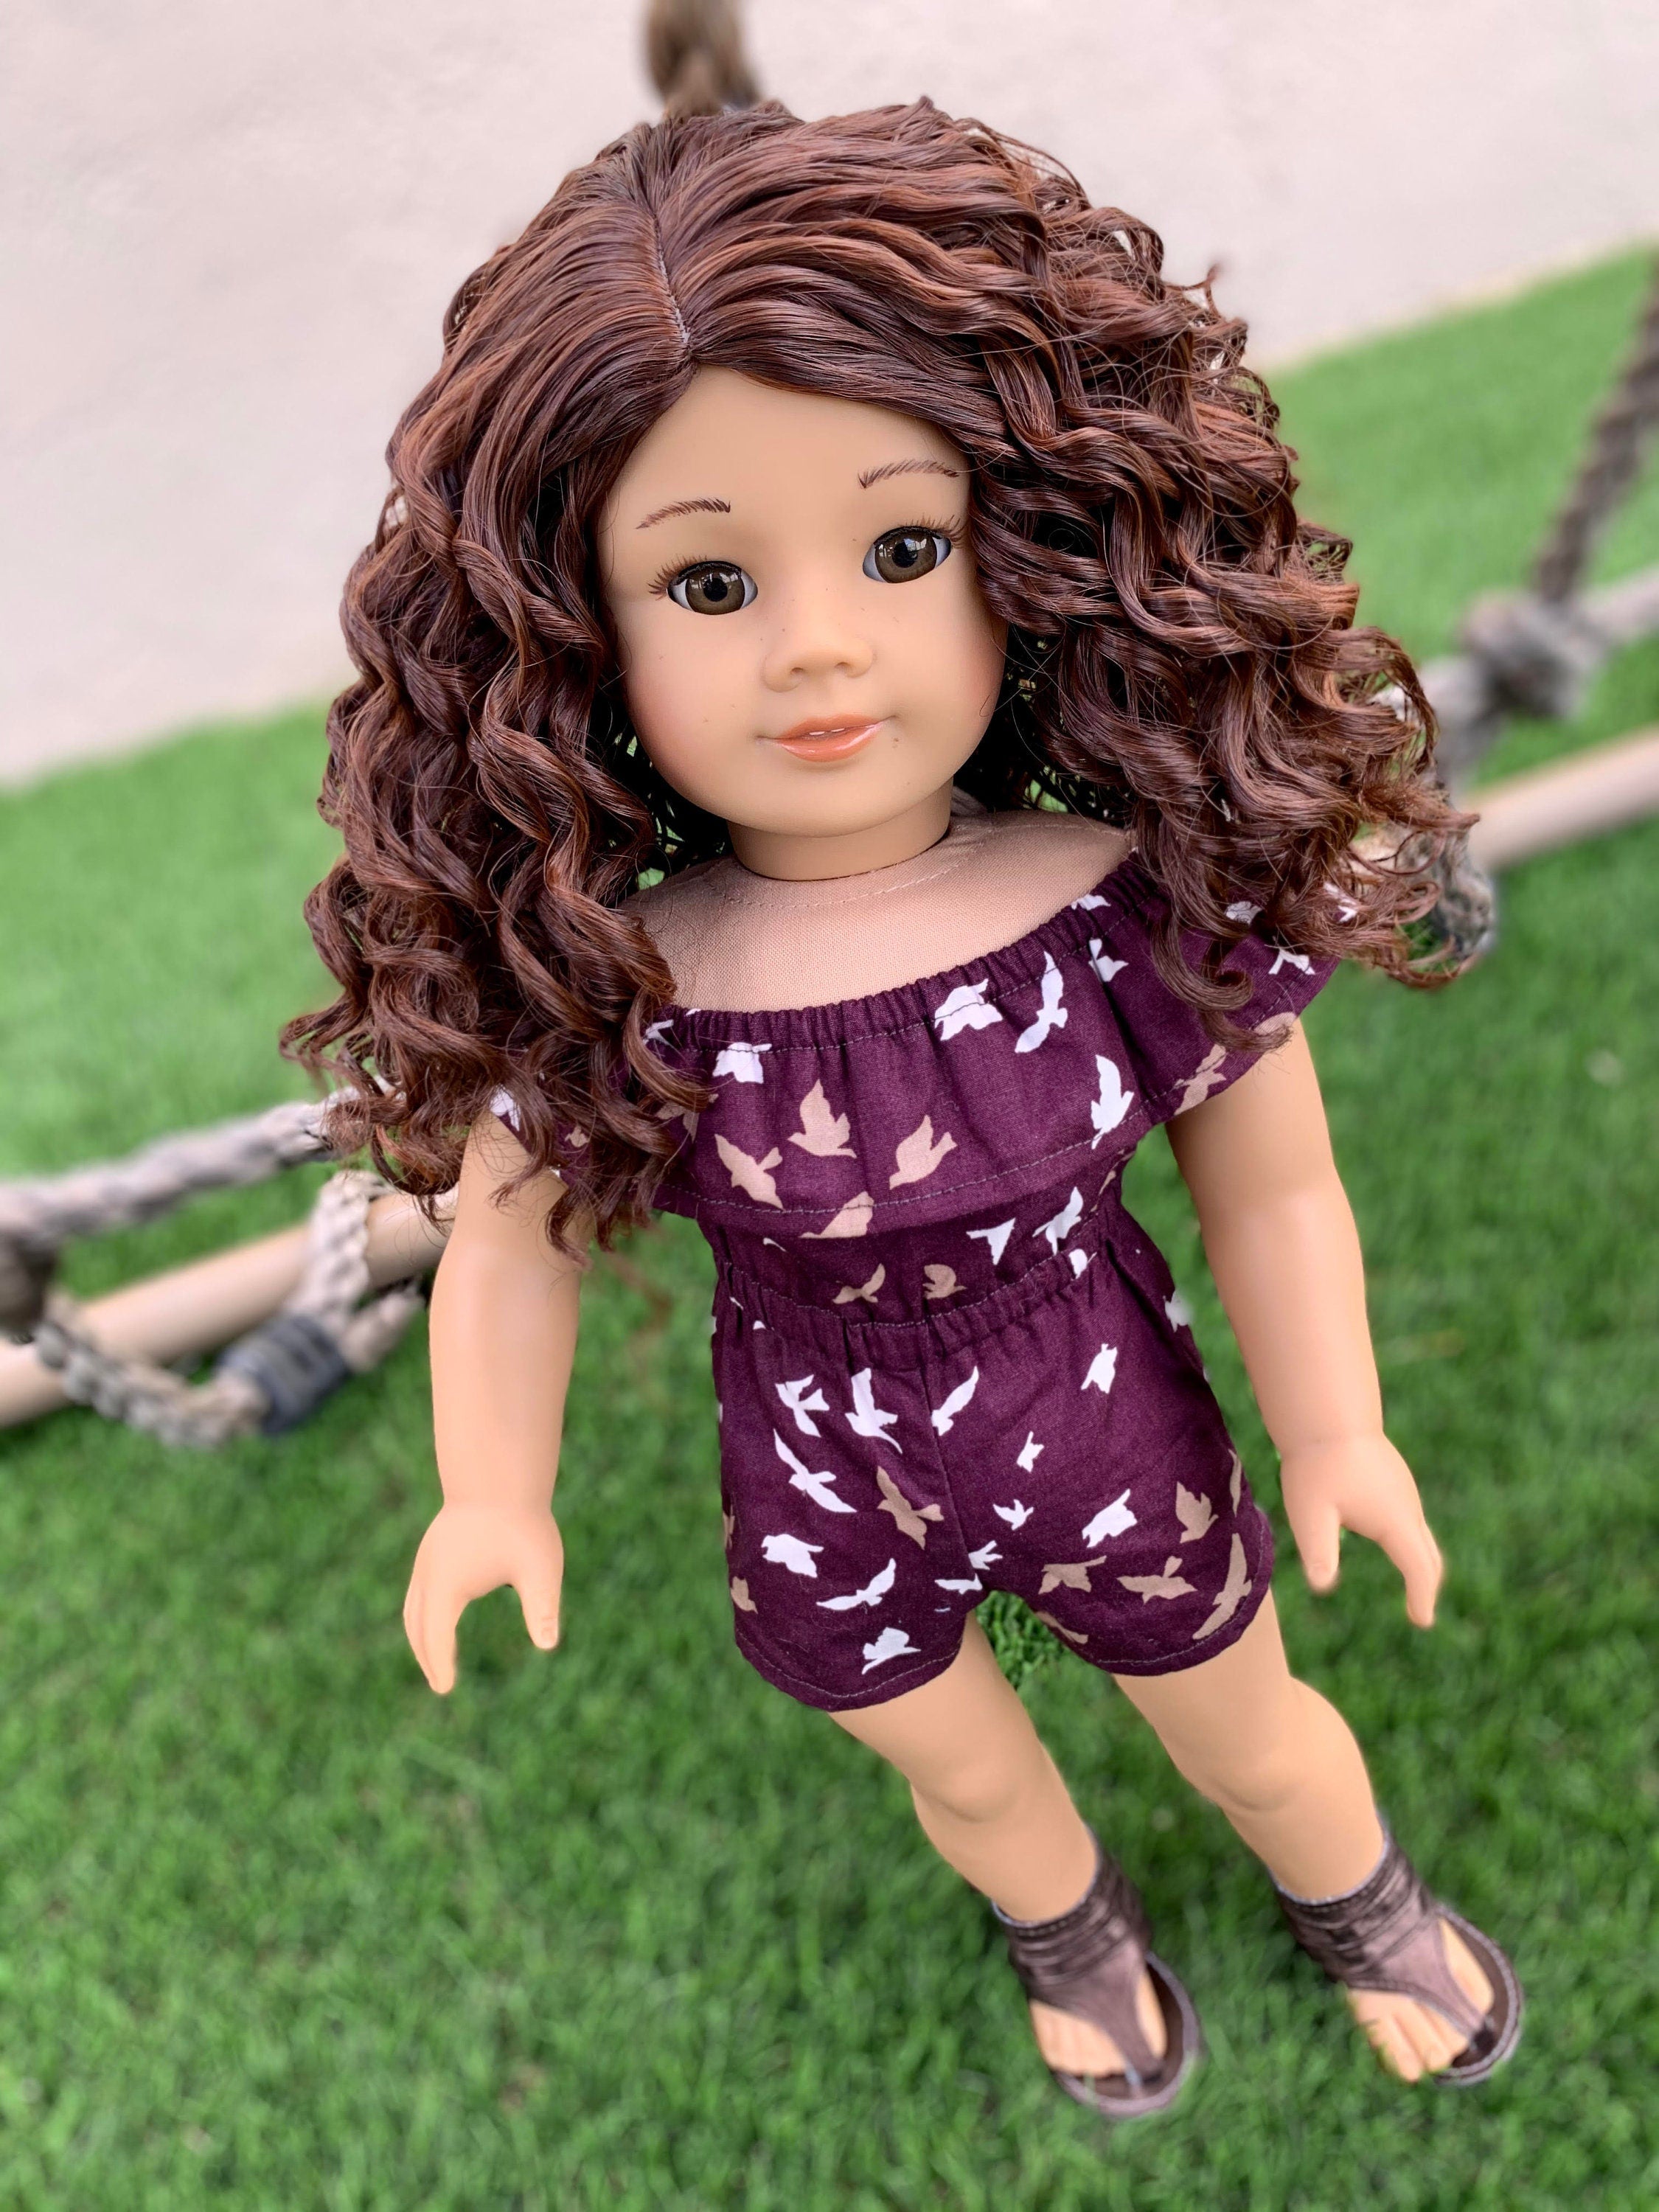 Custom doll wig for 18" American Girl Dolls - Heat Safe - Tangle Resistant - fits 10-11" head size of 18" dolls  Blythe BJD Gotz